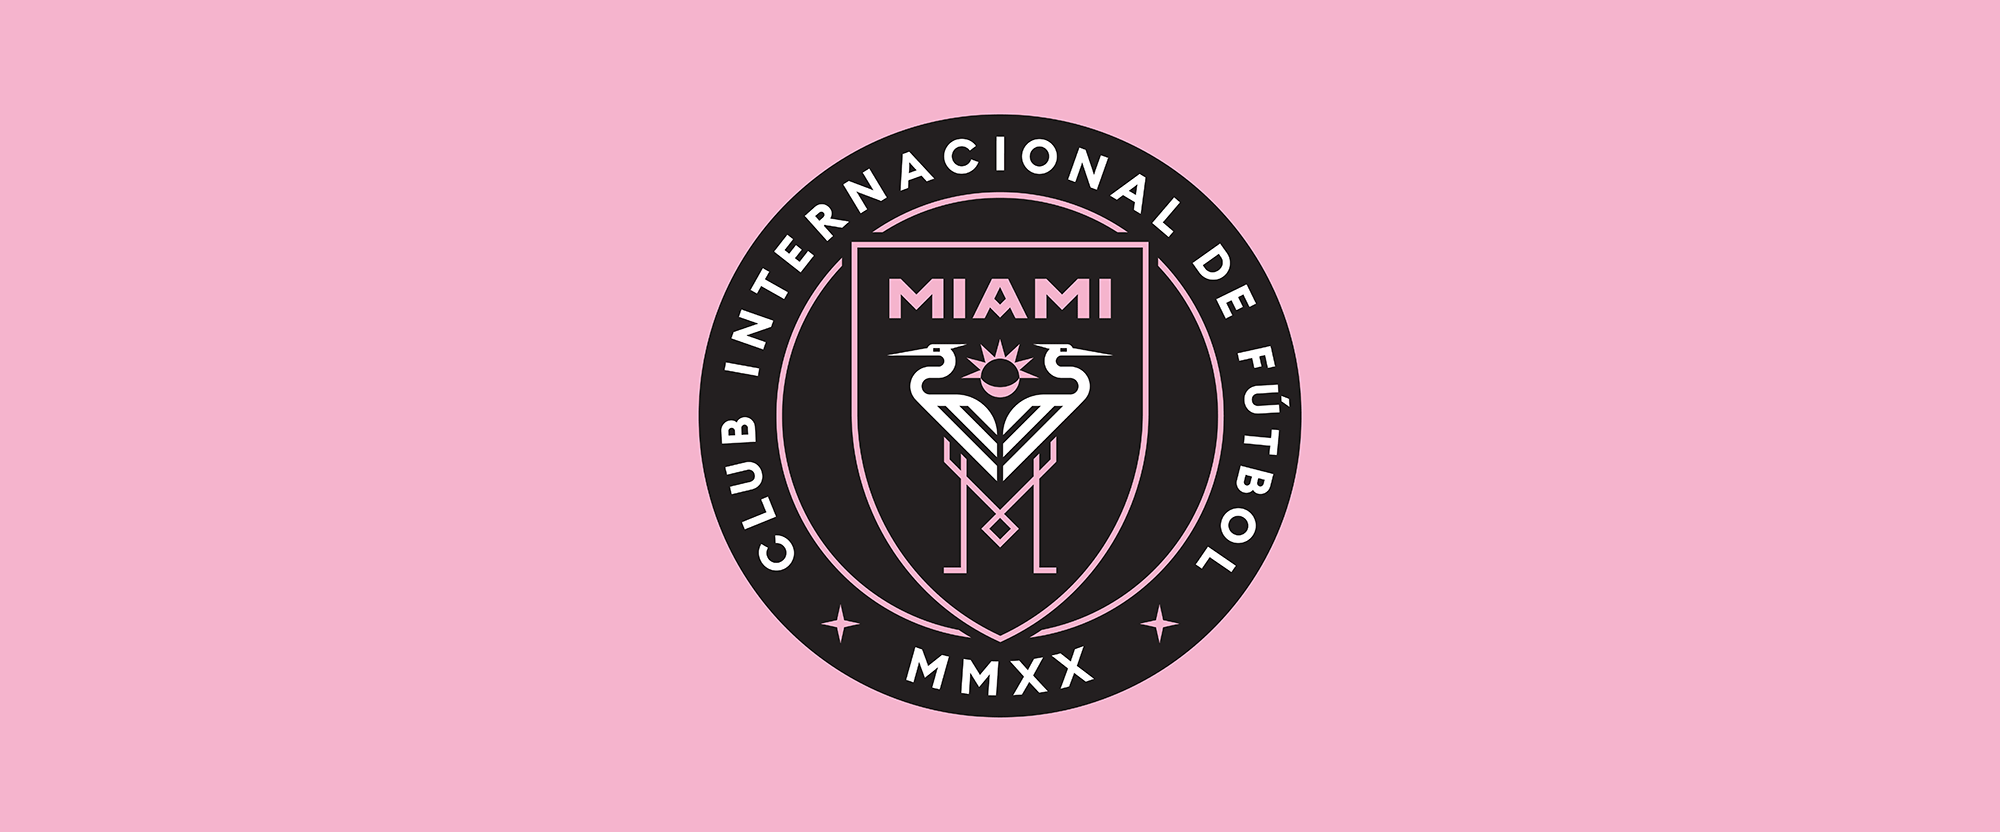 Brand New New Logo For Club Internacional De Futbol Miami By Doubleday Cartwright